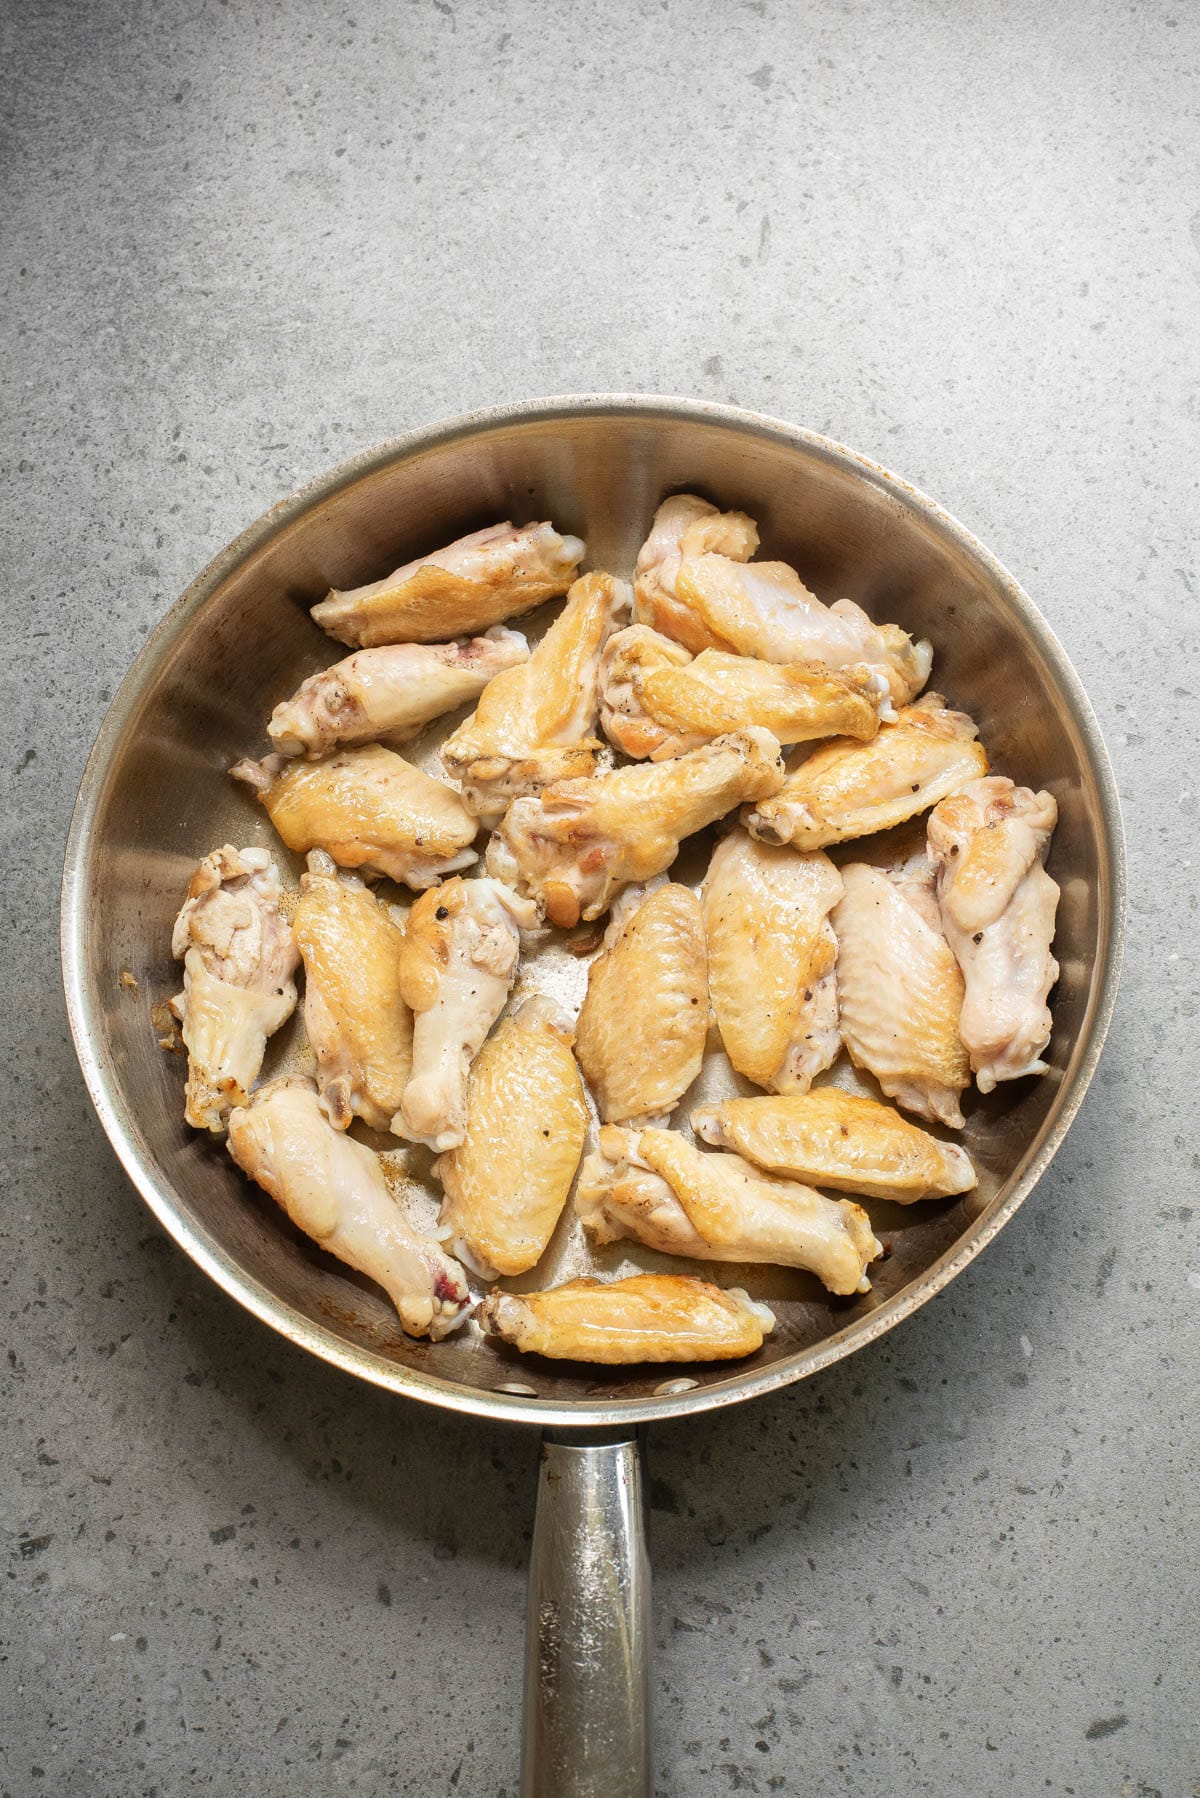 Chicken wings in a skillet.